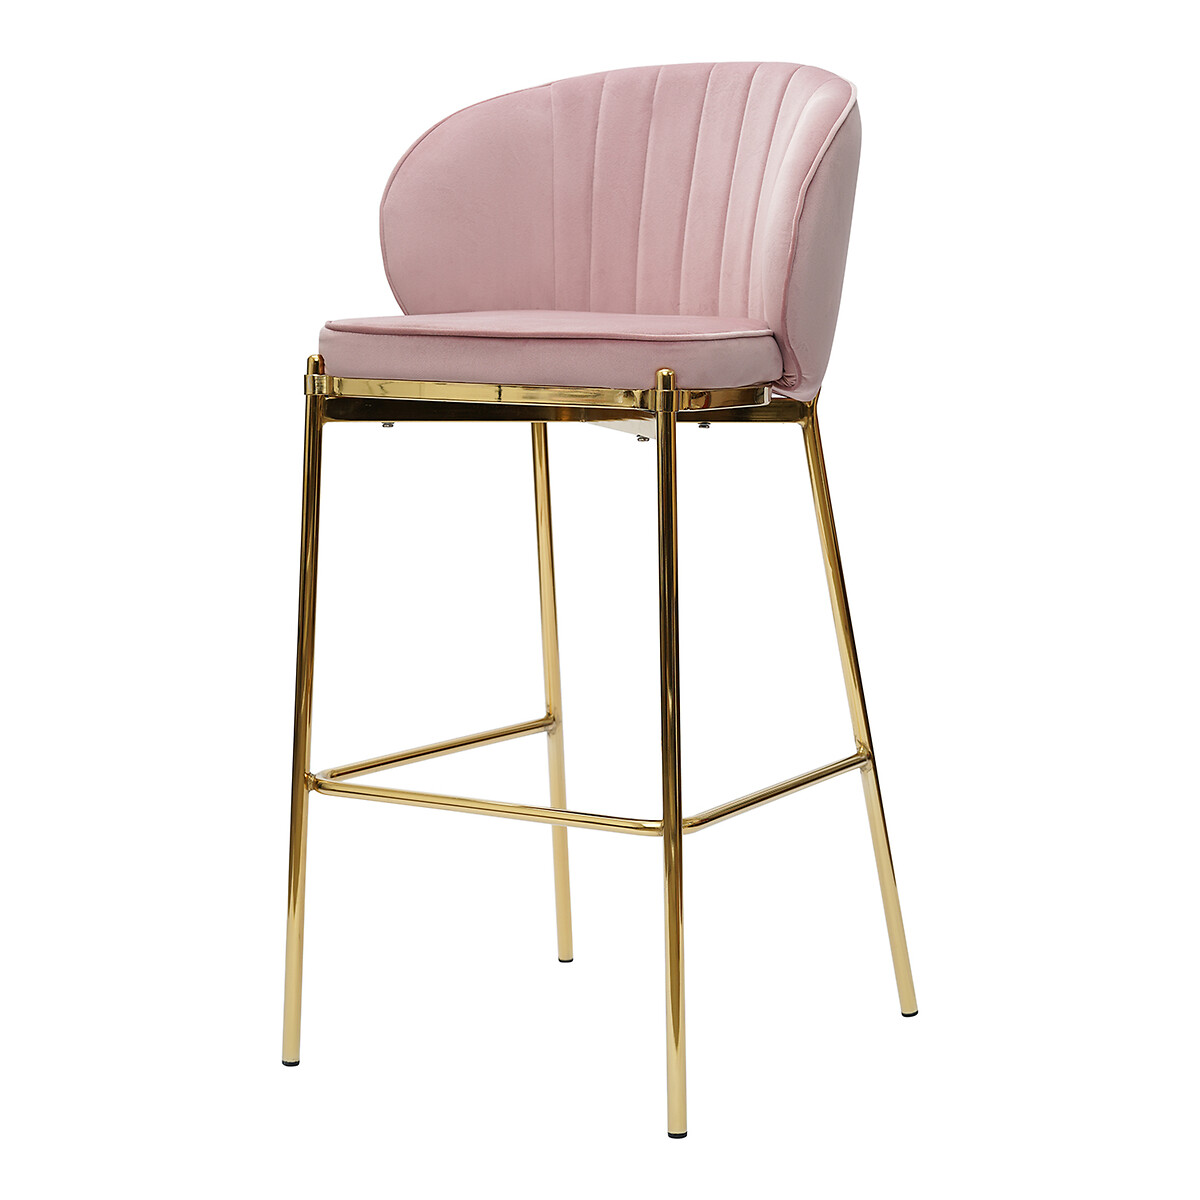 Стул барный Coral единый размер розовый стул eirill единый размер розовый